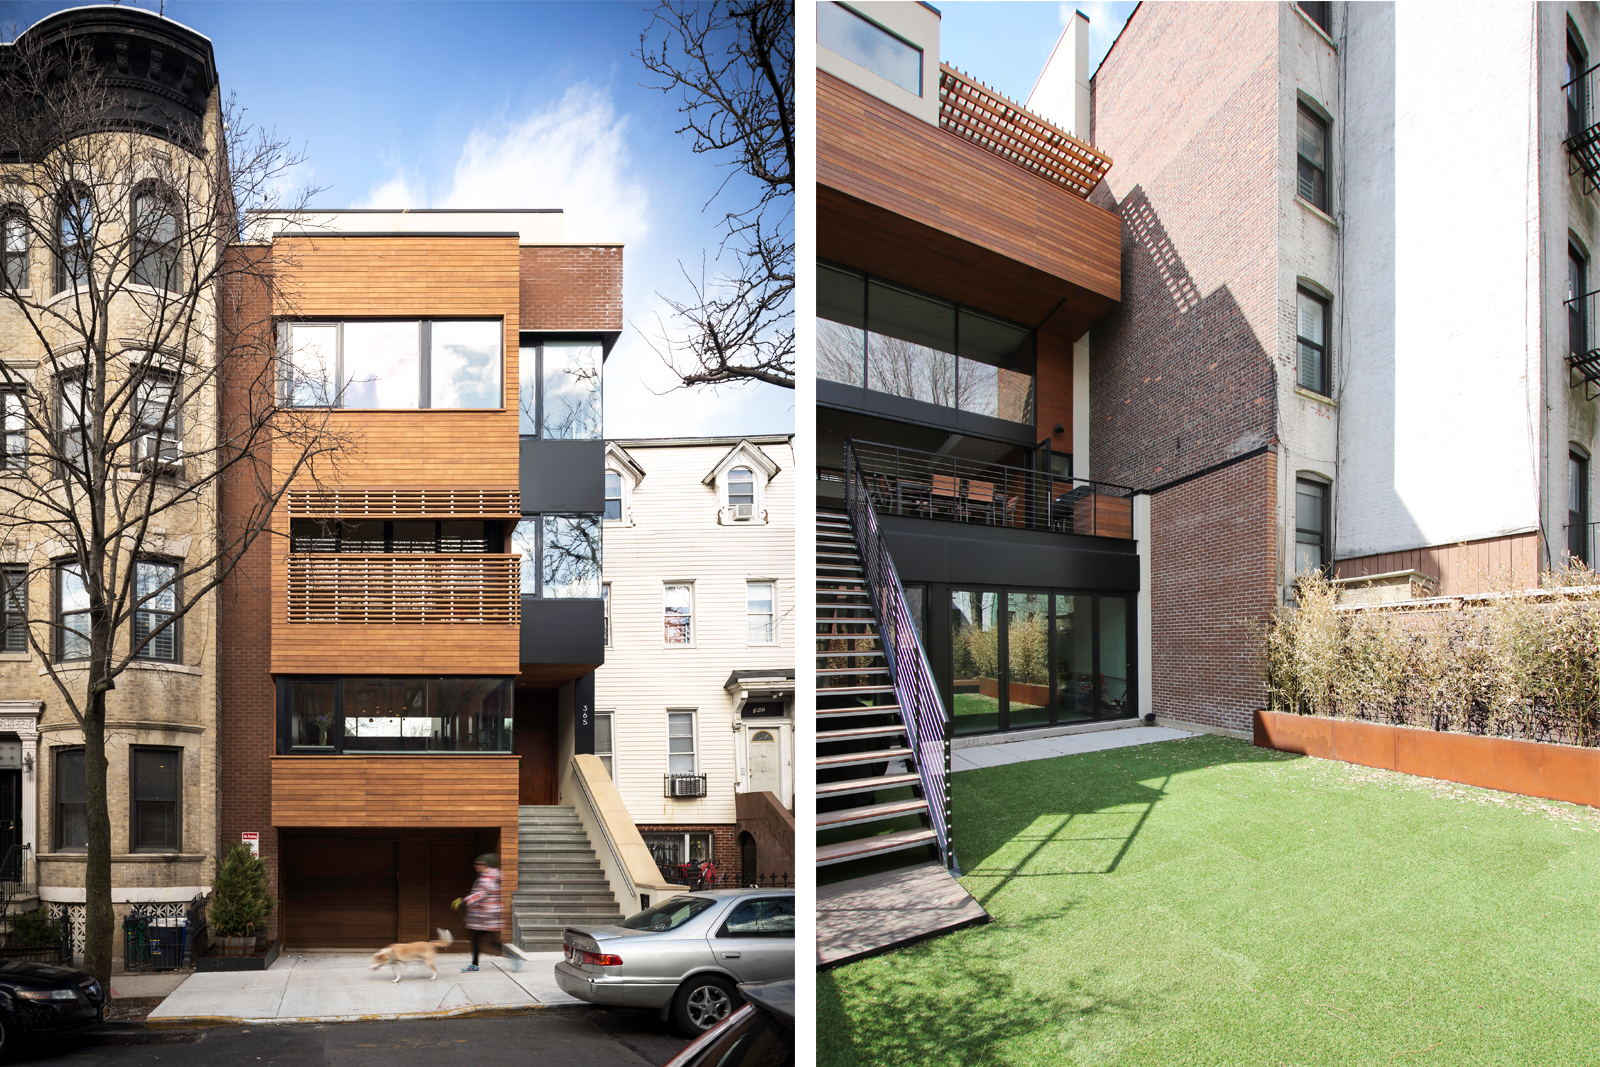 res4-resoltuion-4-architecture-modern-brownstone-home-renovation-exterior-facade-garden-terrace-day.jpg